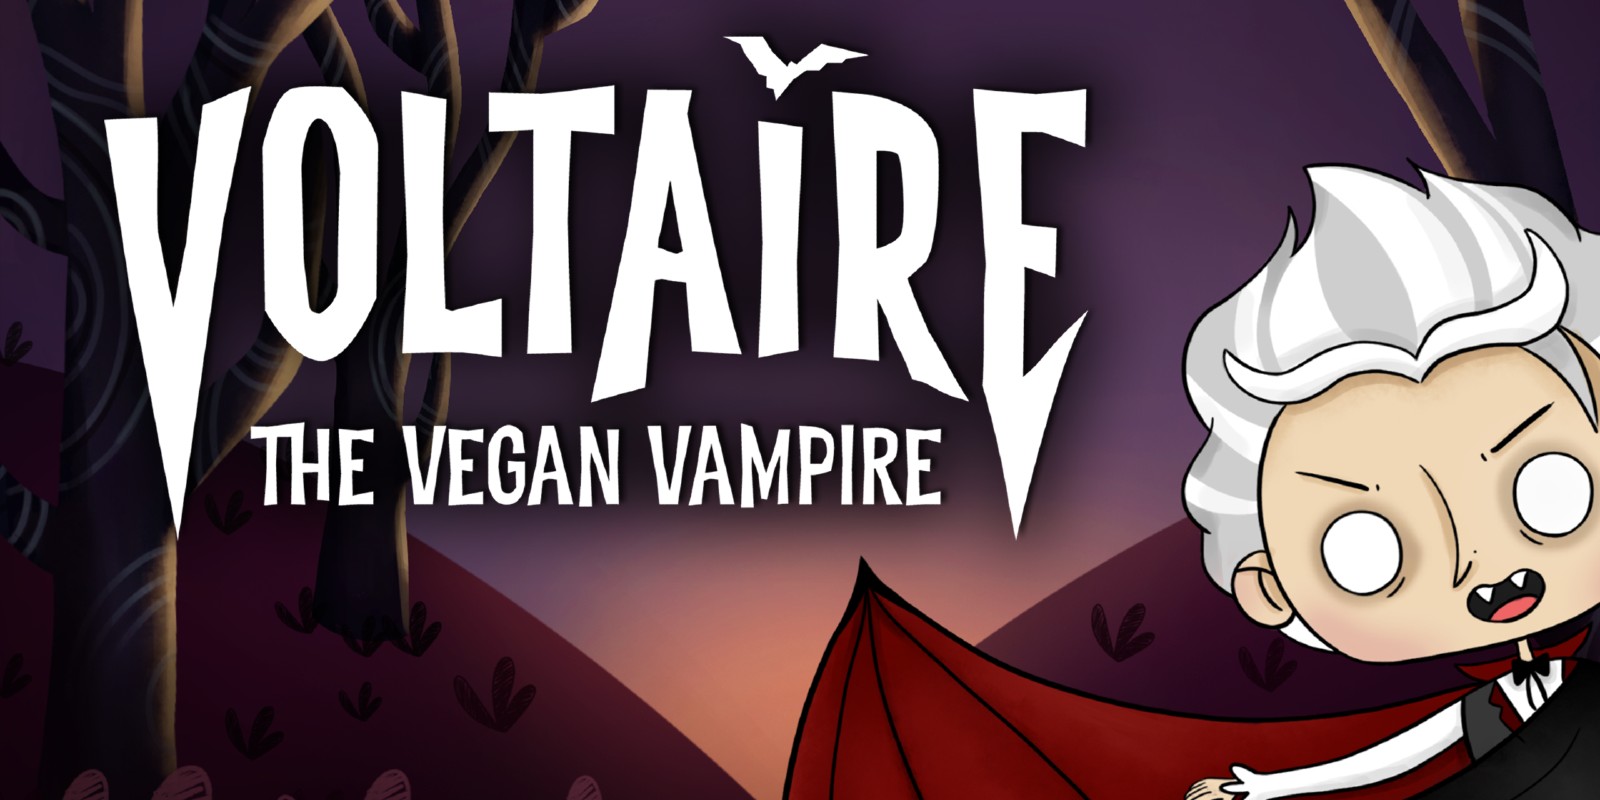 free instal Voltaire: The Vegan Vampire